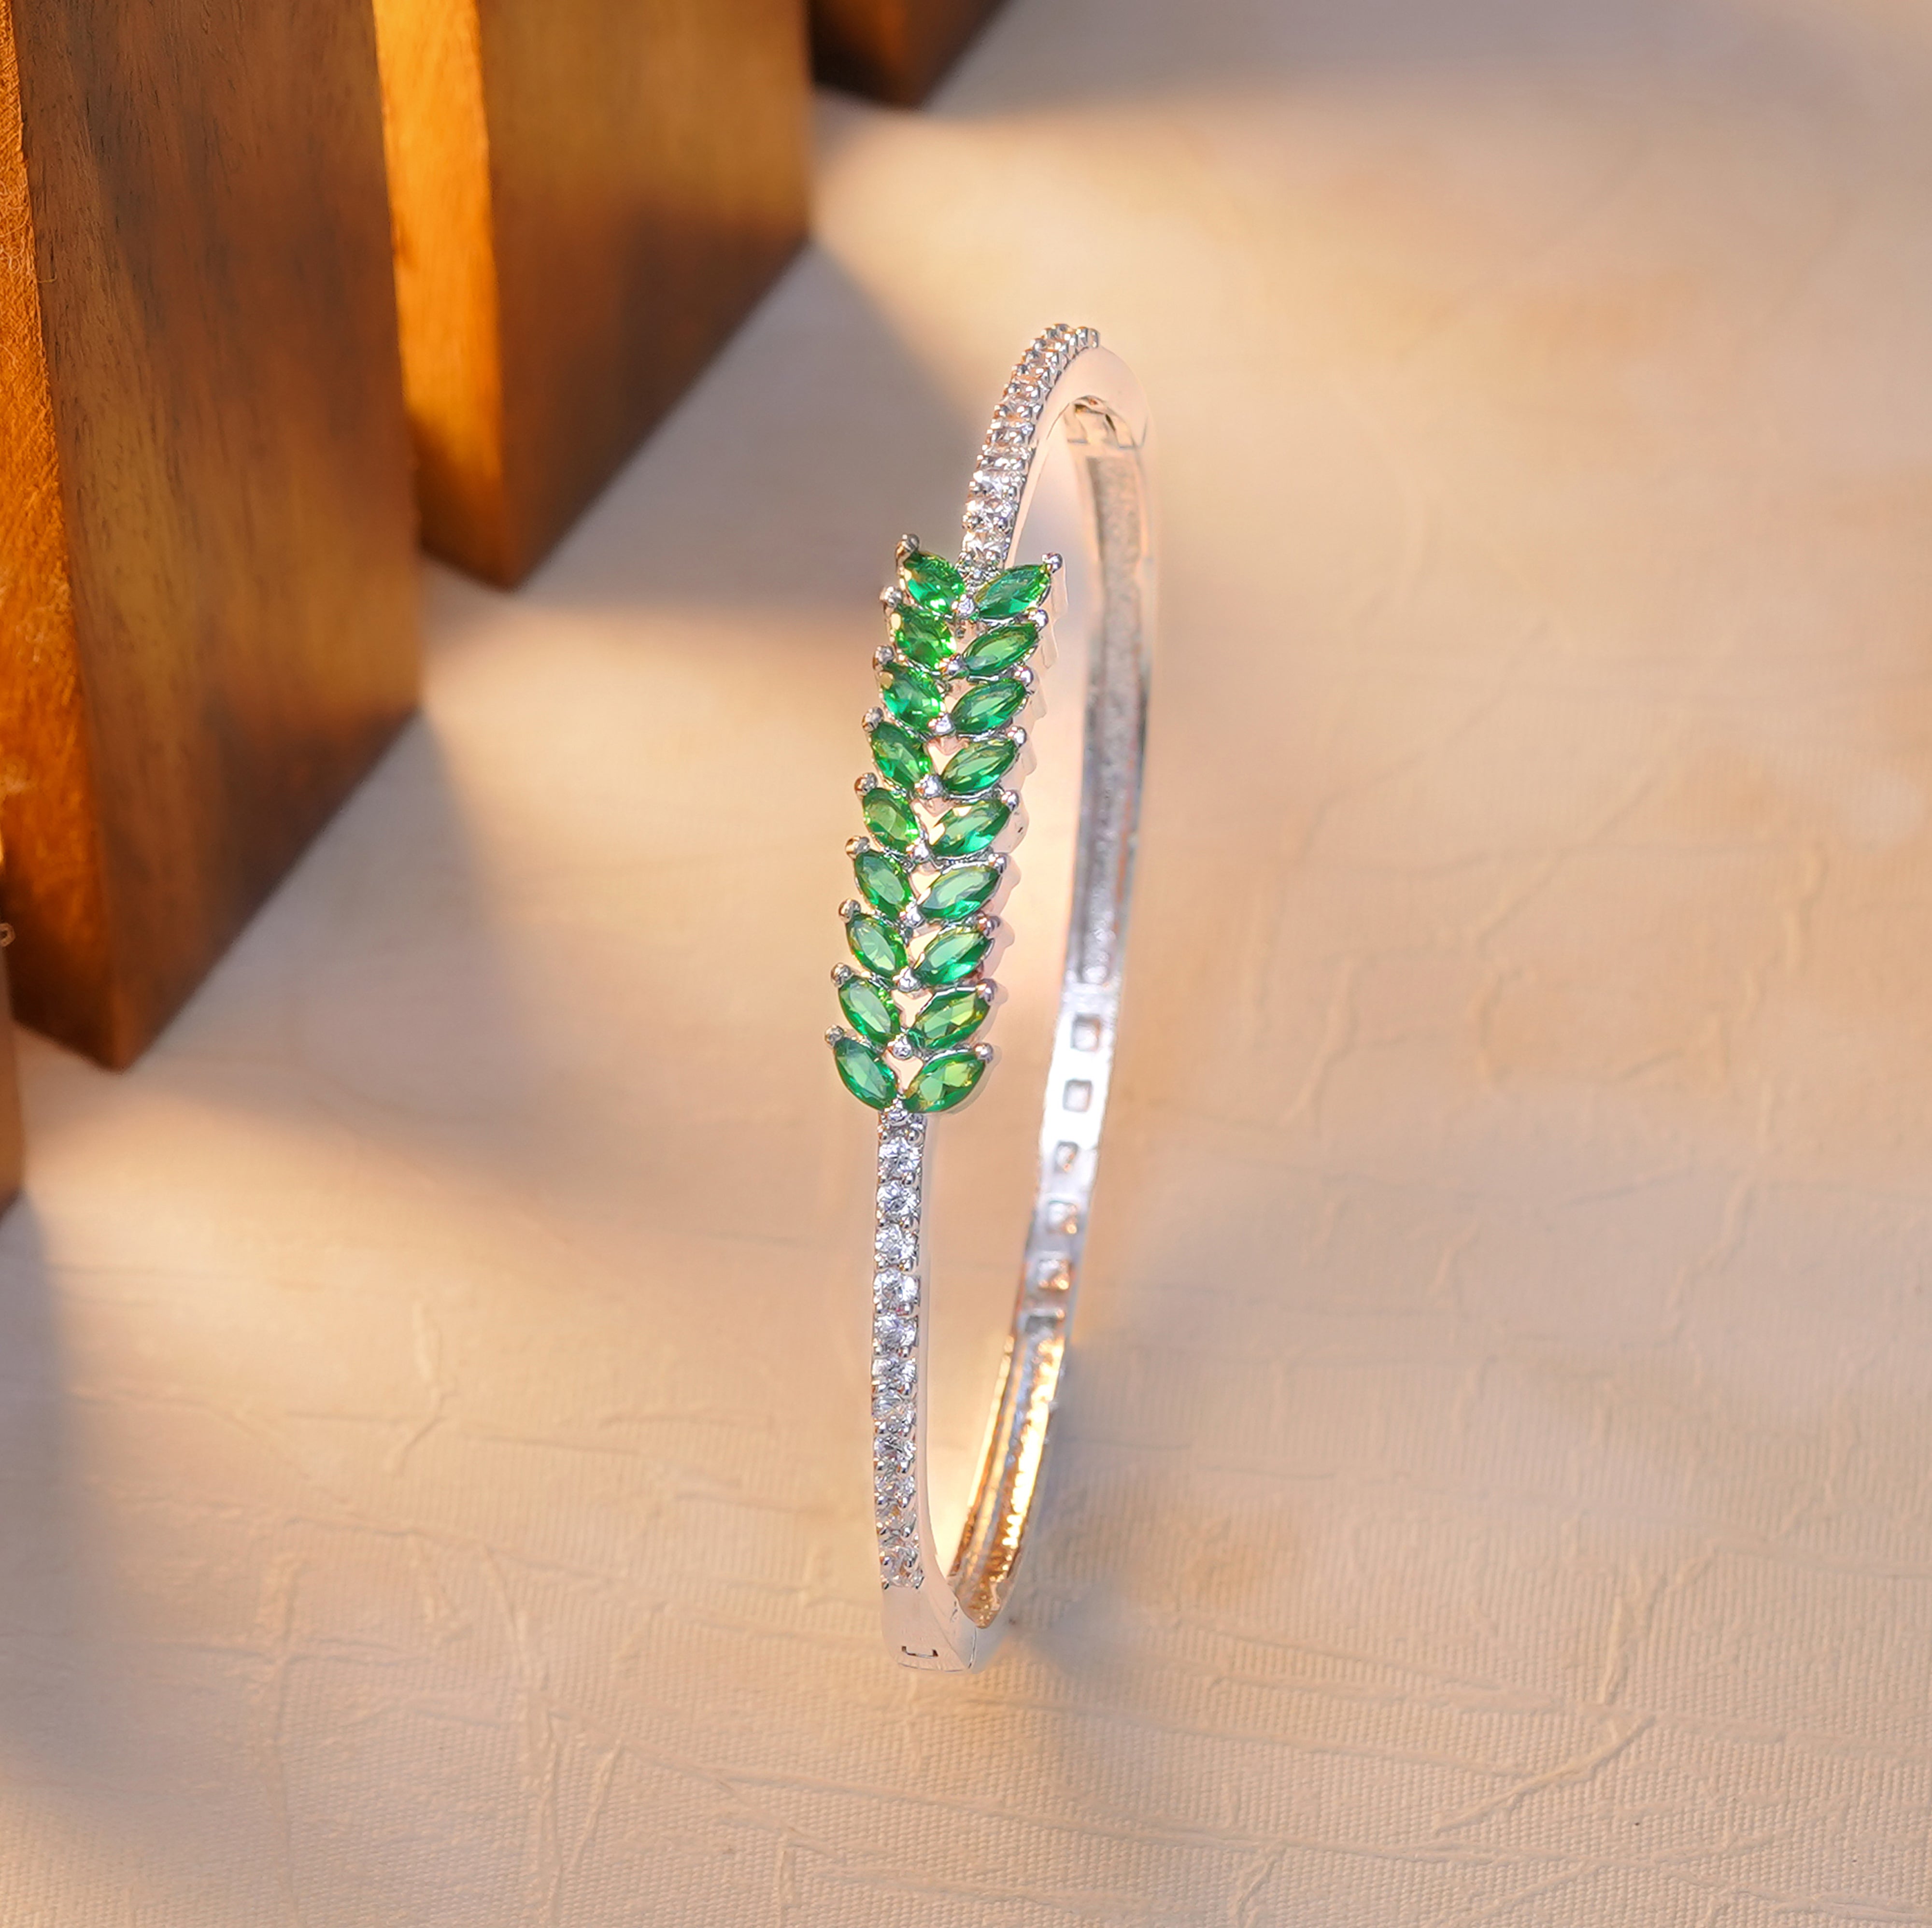 Ethereal Elegance Diamond Embellished Bracelet